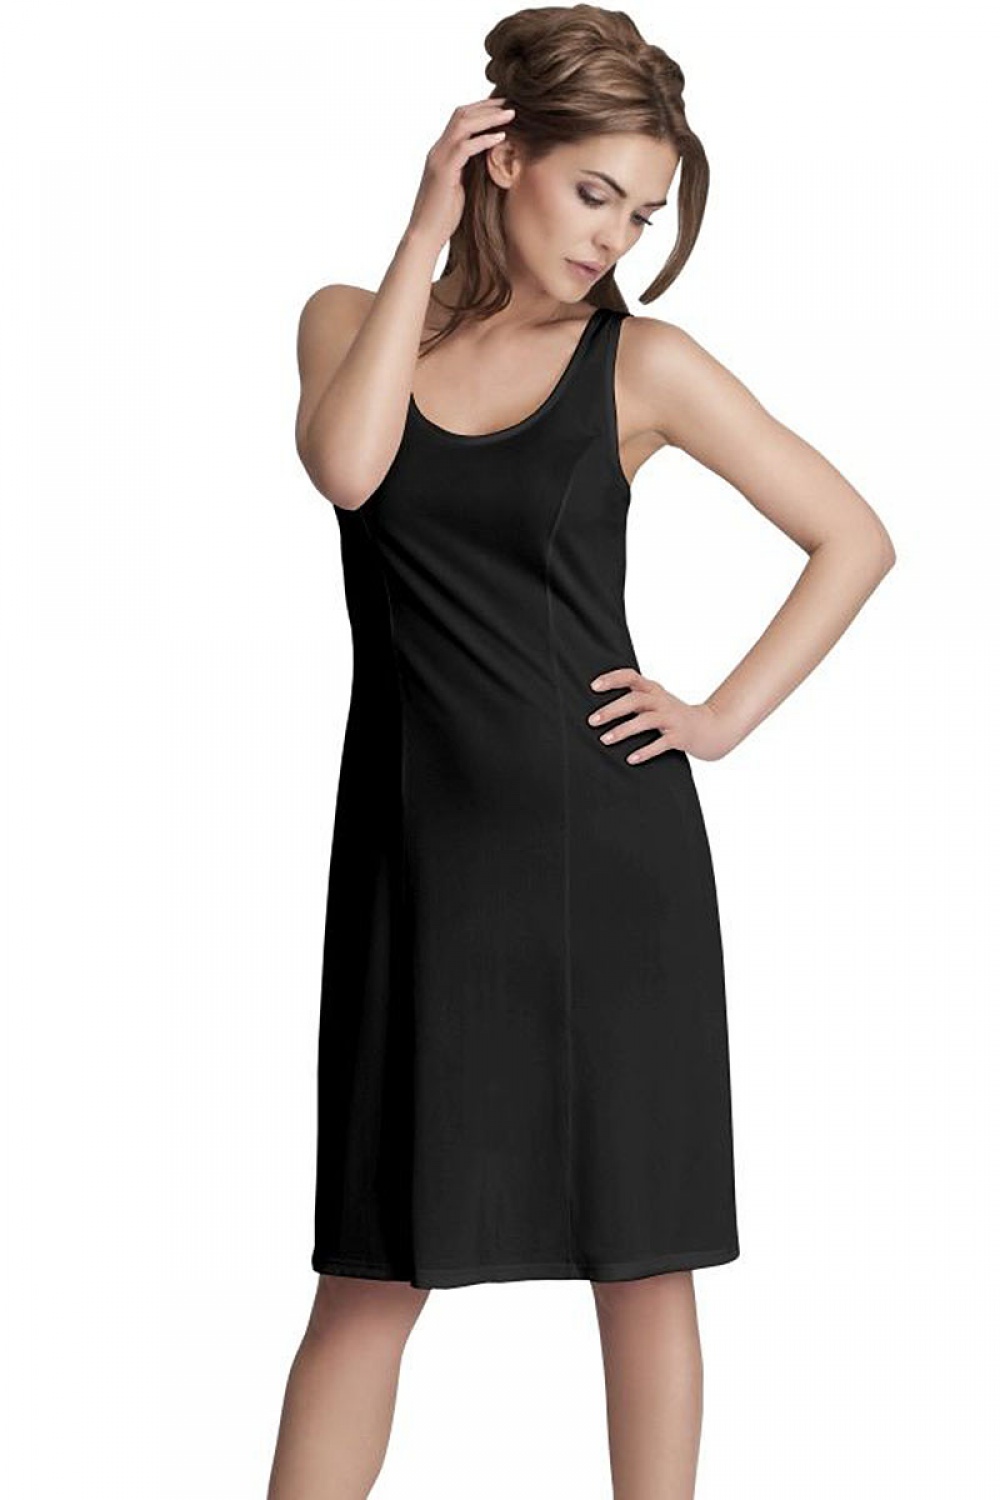 Petticoat model 108470 Mewa black Ladies